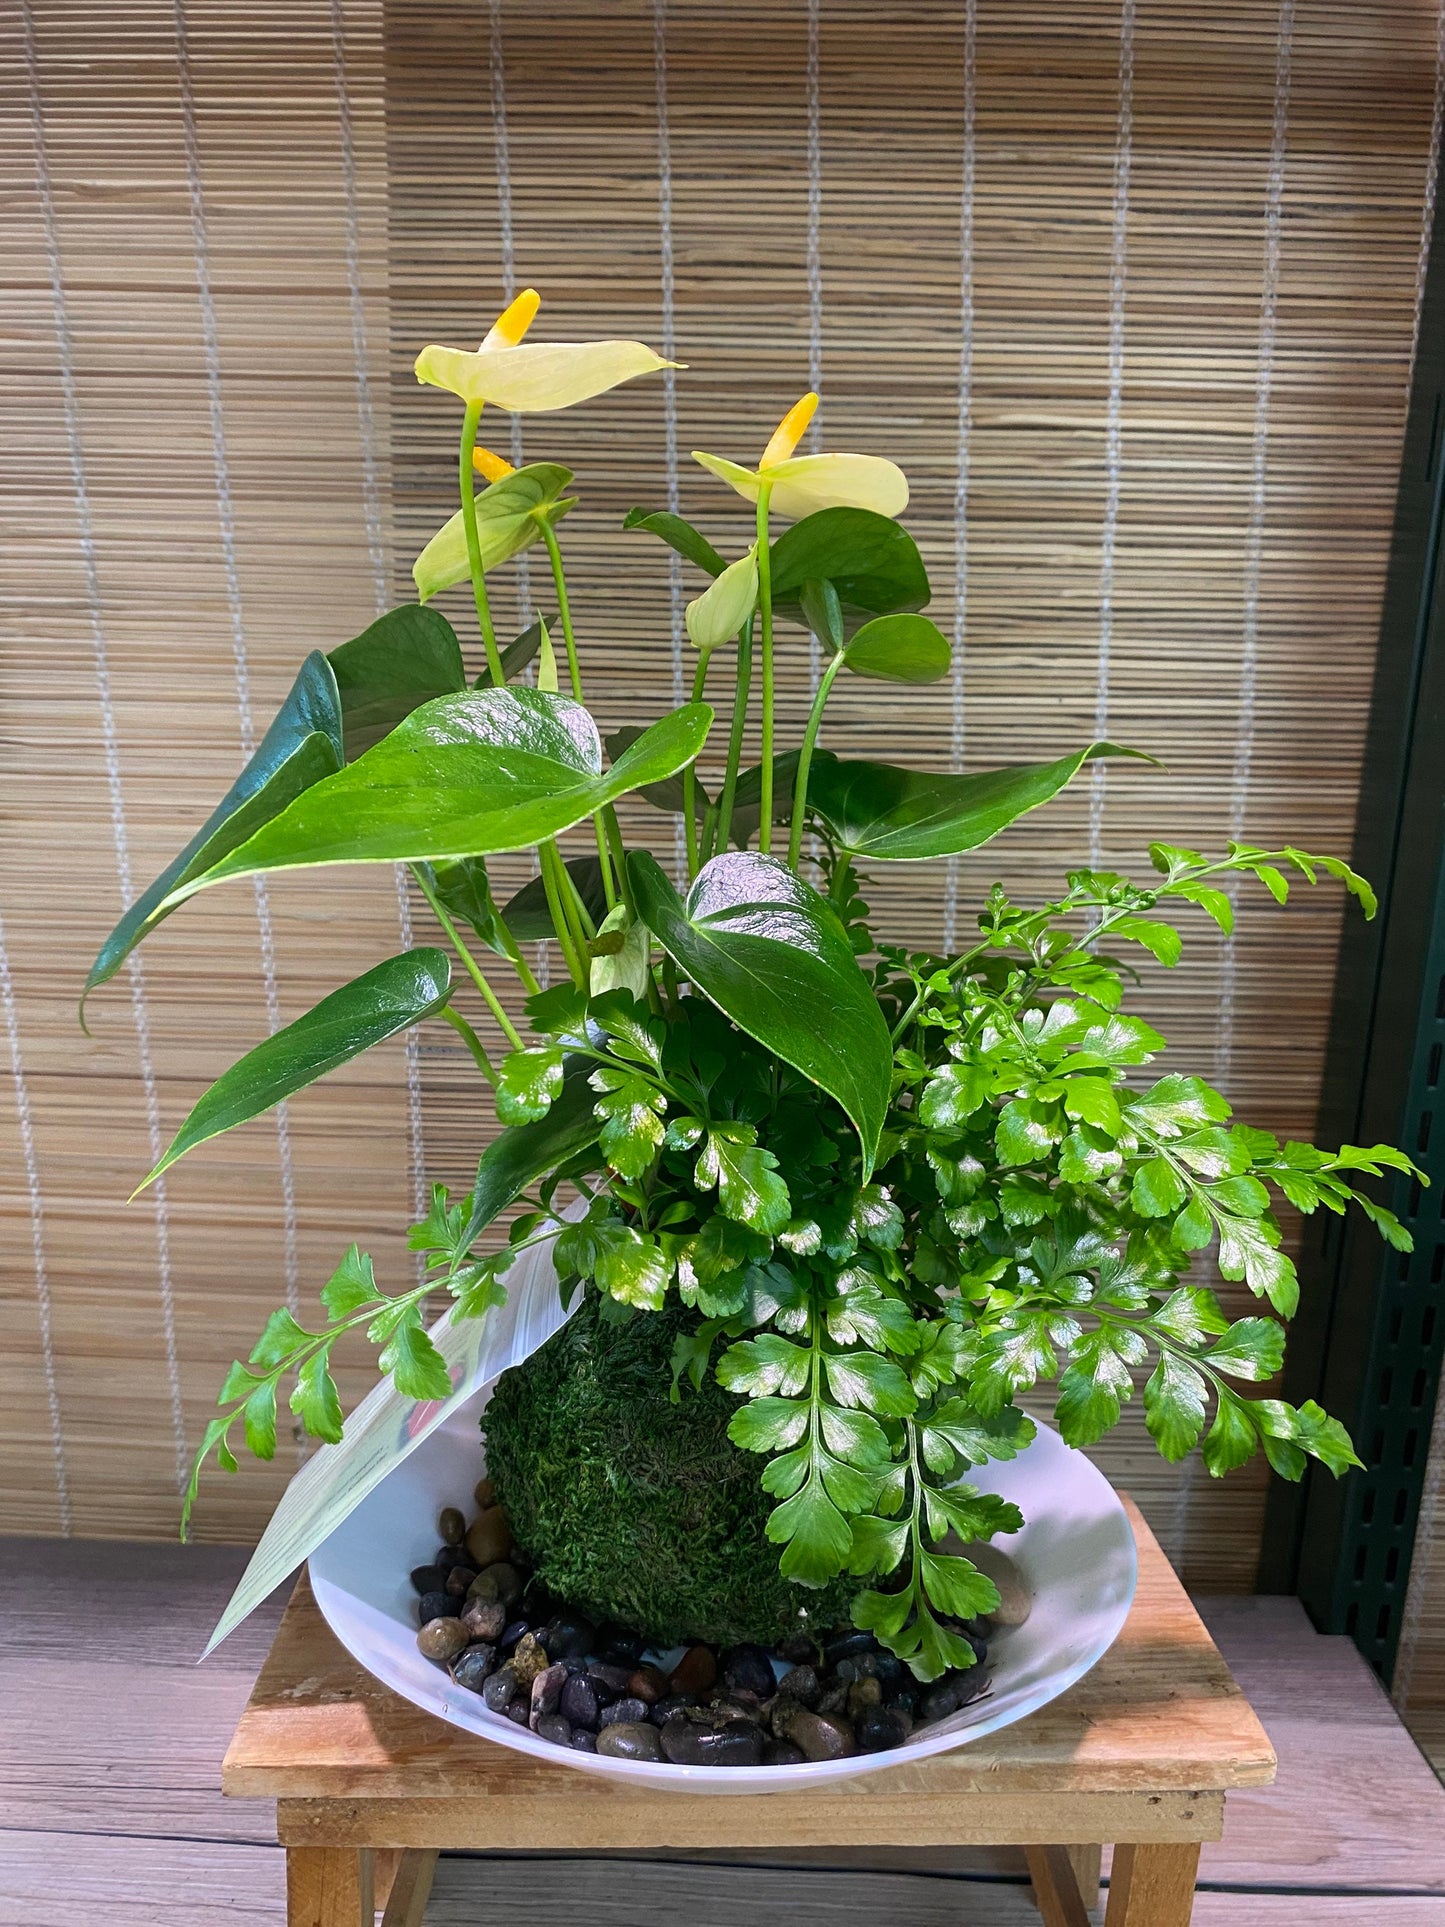 Medium - Anthurium and Fern kokedama -- Bonsai Moss ball -  house decor with Japanese technique plants!